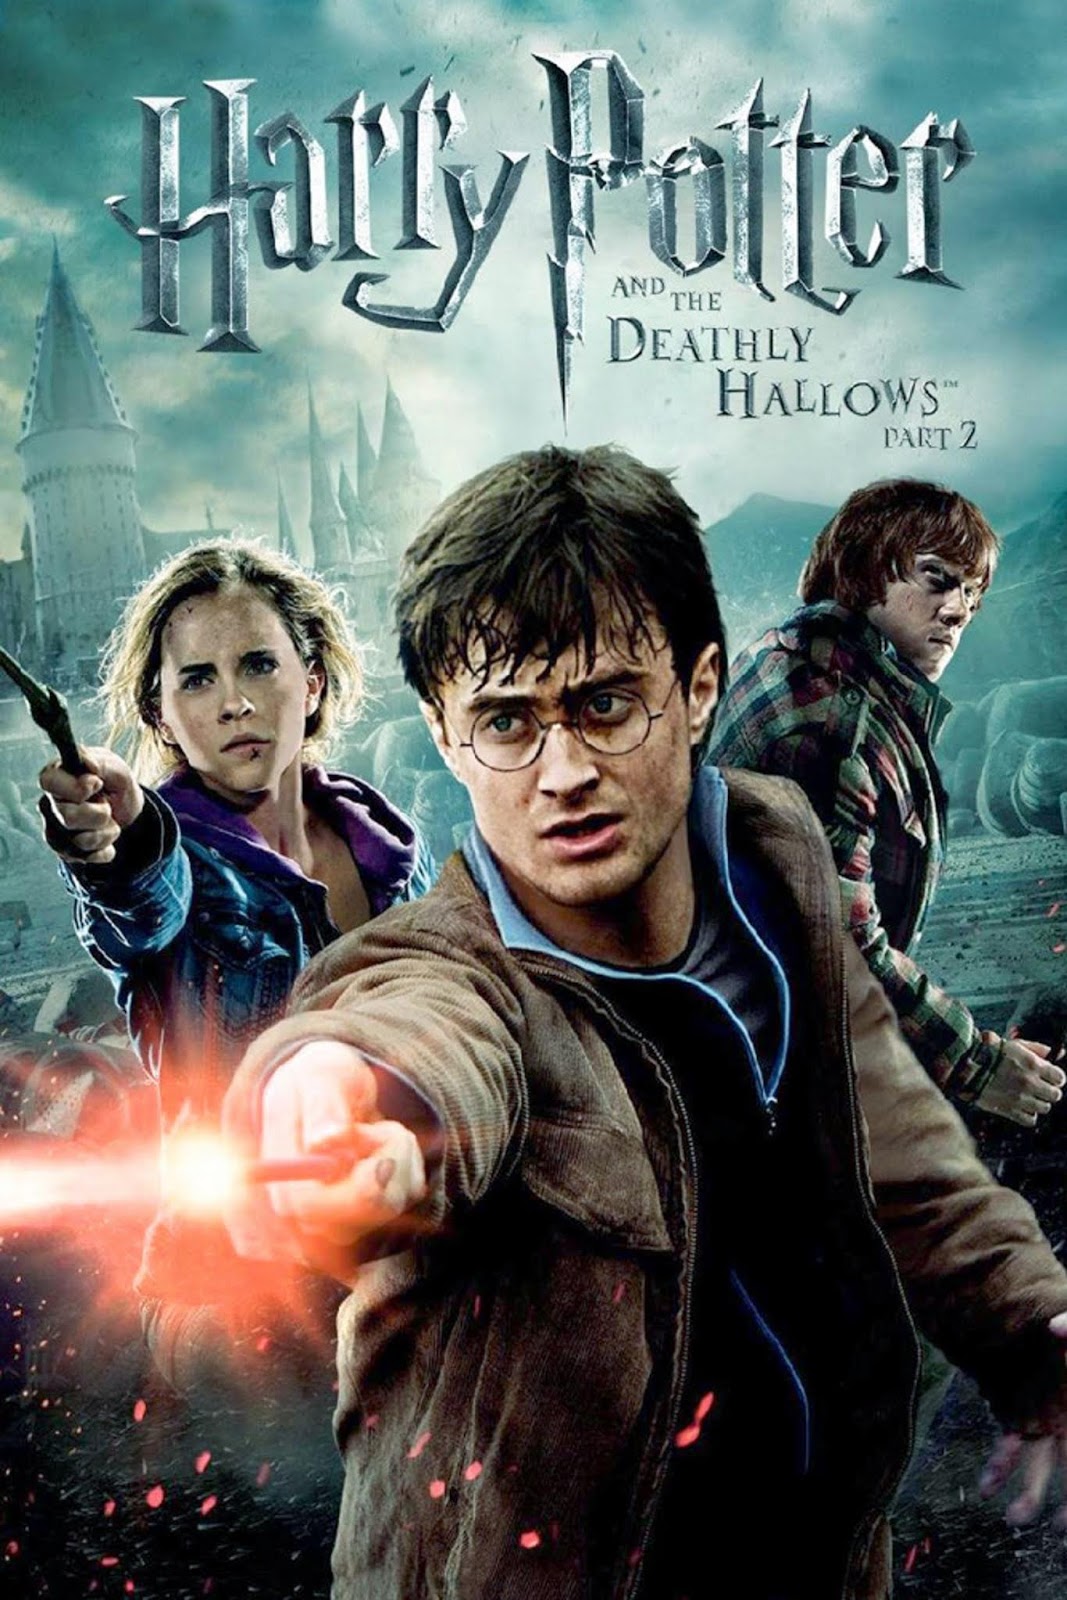 Destroy the Horcruxes (Official Harry Potter Activity Book) - A2Z